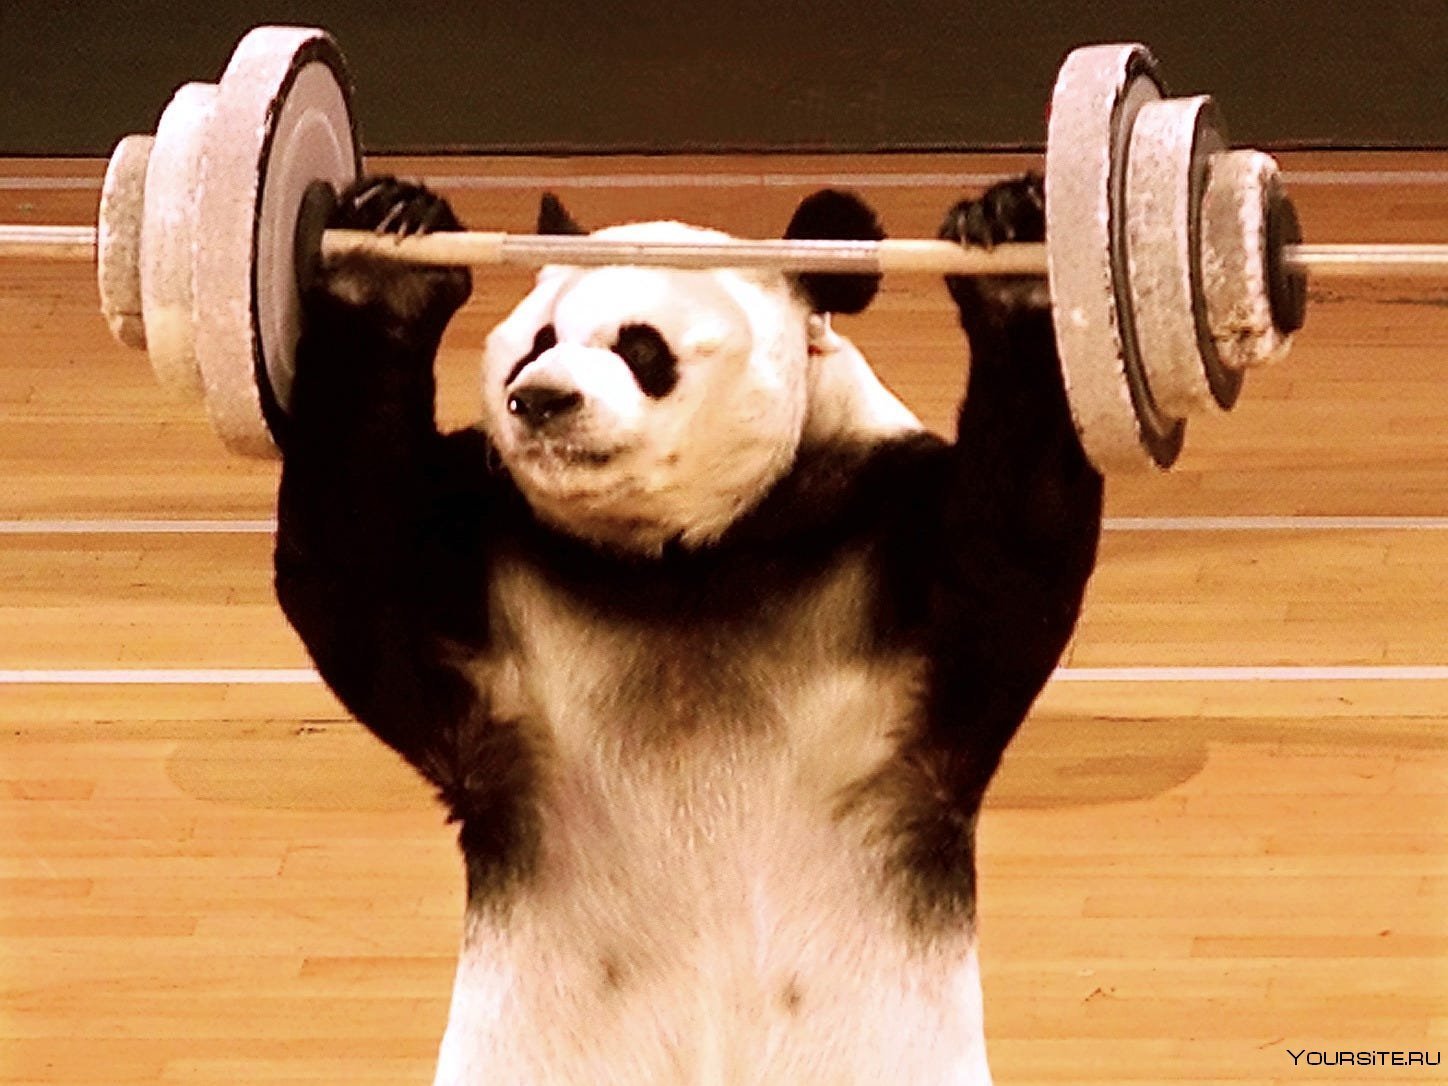 Панда лось. Животные спортсмены. Животные в спортзале. Животные спортсмены смешные. Спортивное животное.